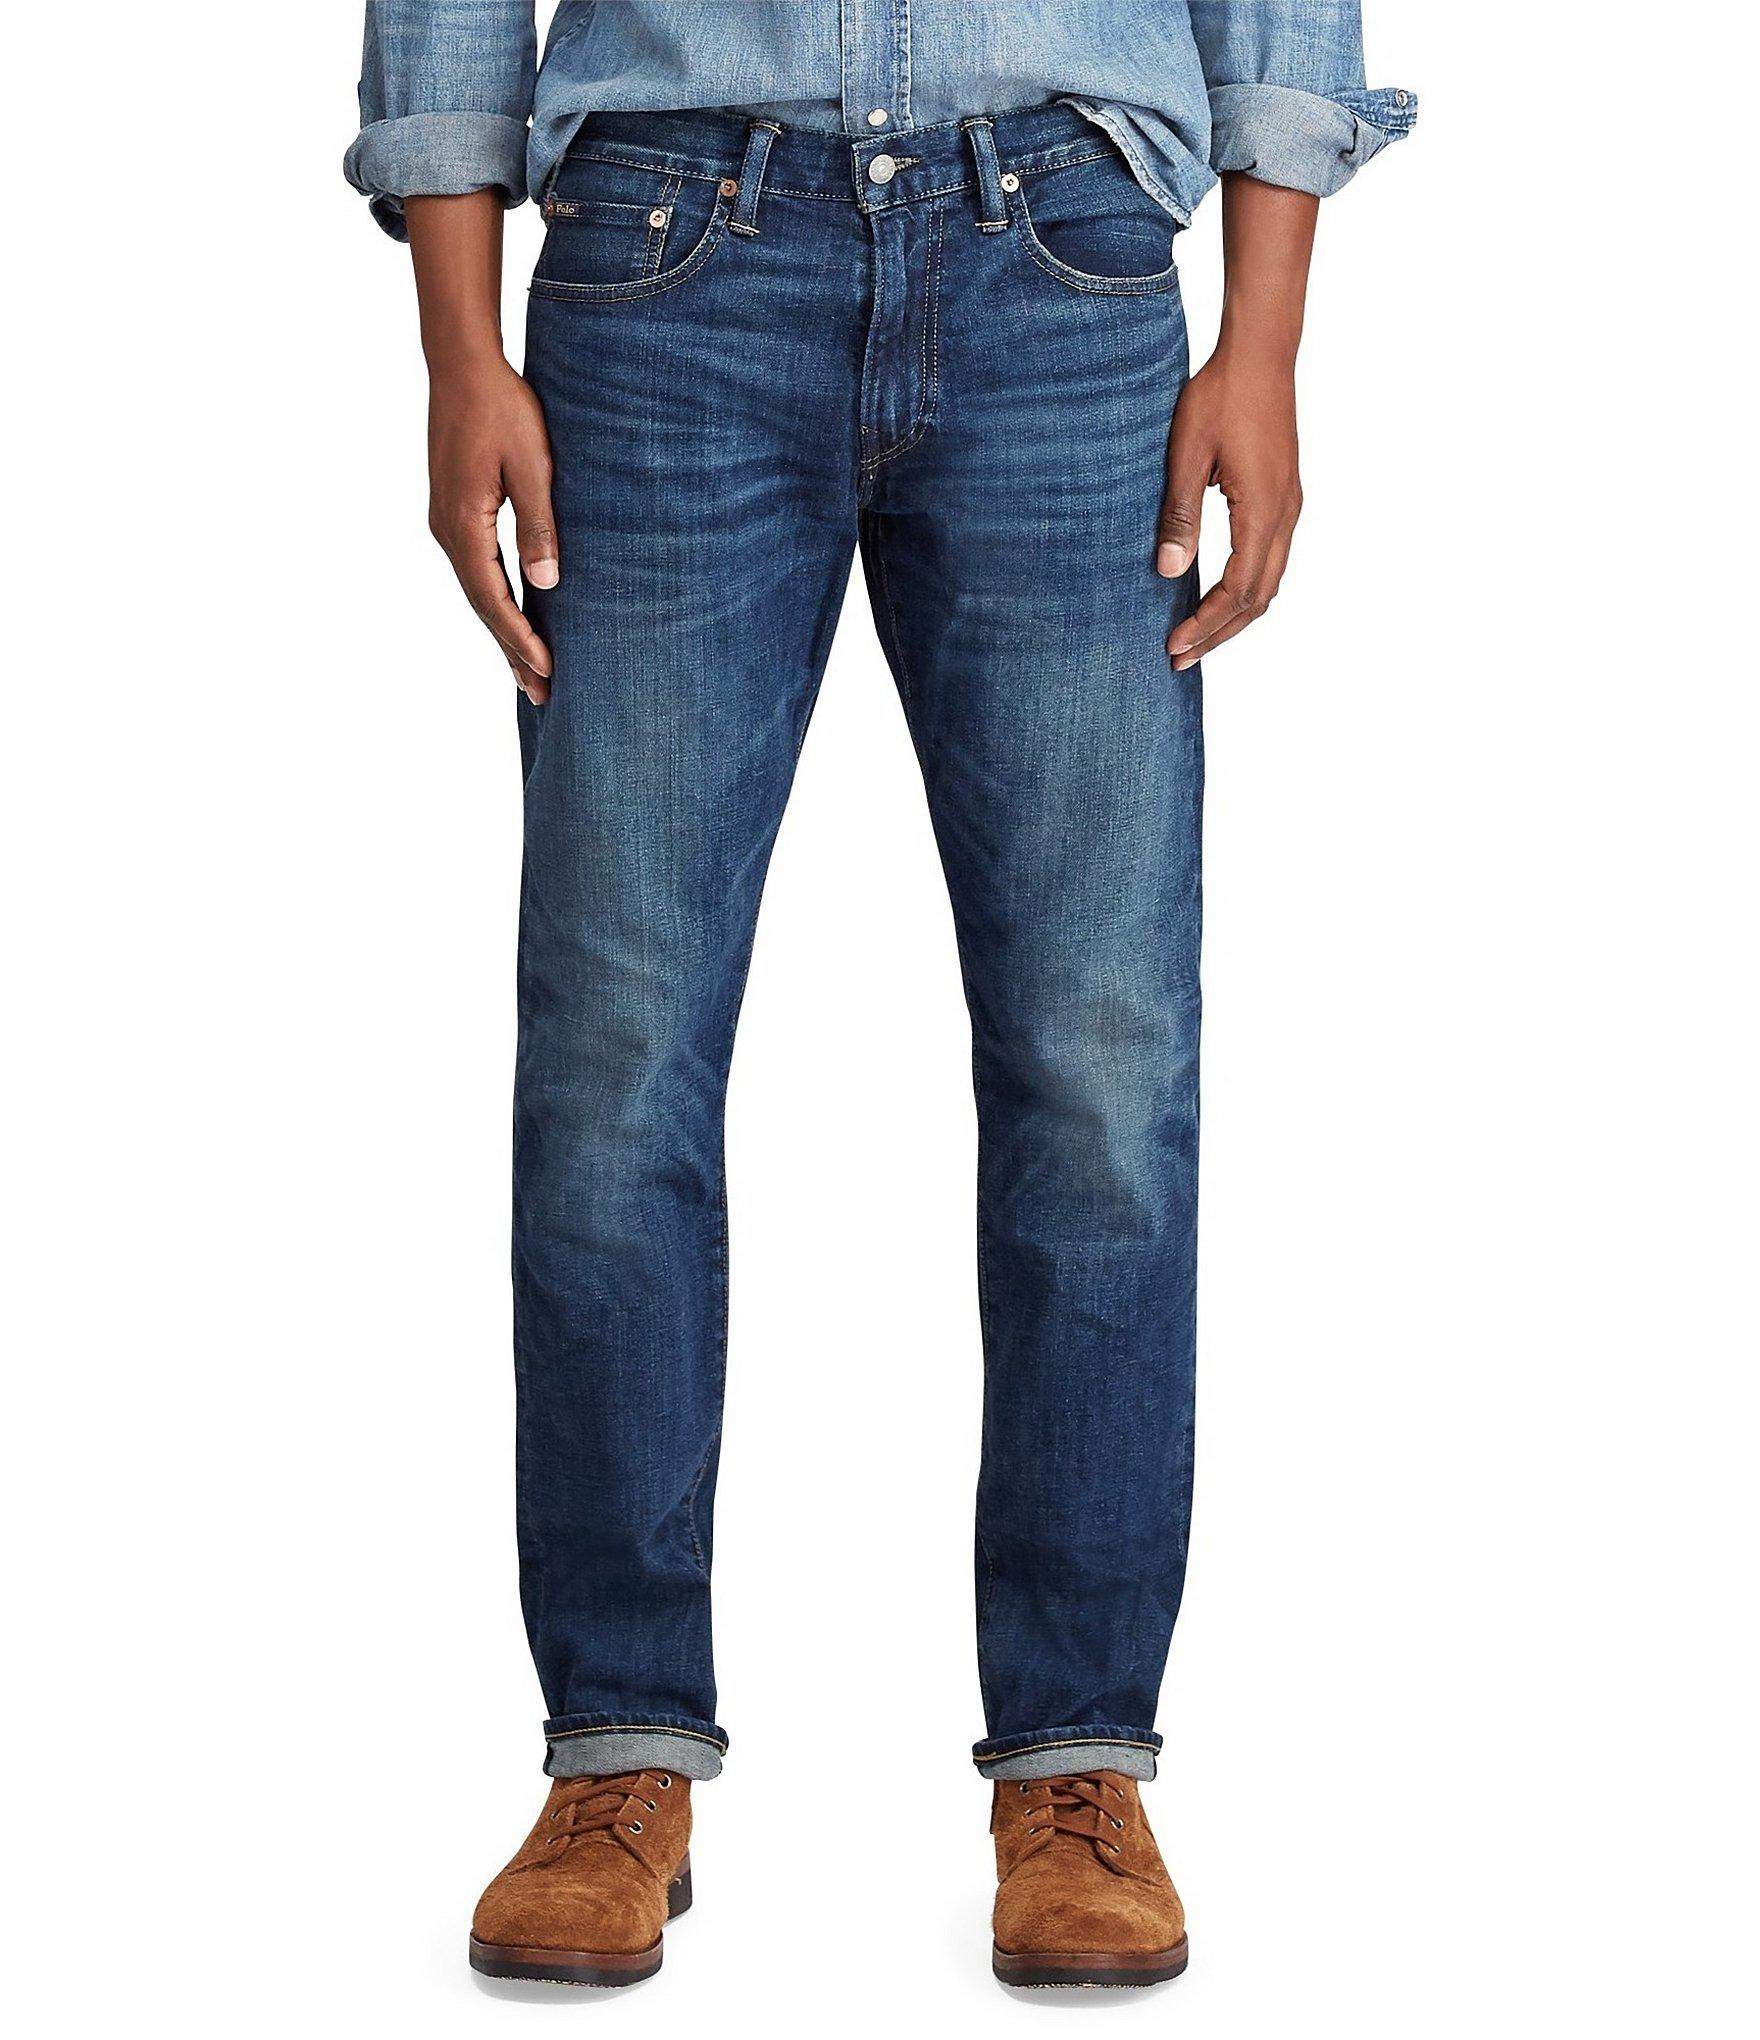 Lyst - Polo Ralph Lauren Varick Slim-straight Stretch Jeans in Blue for Men